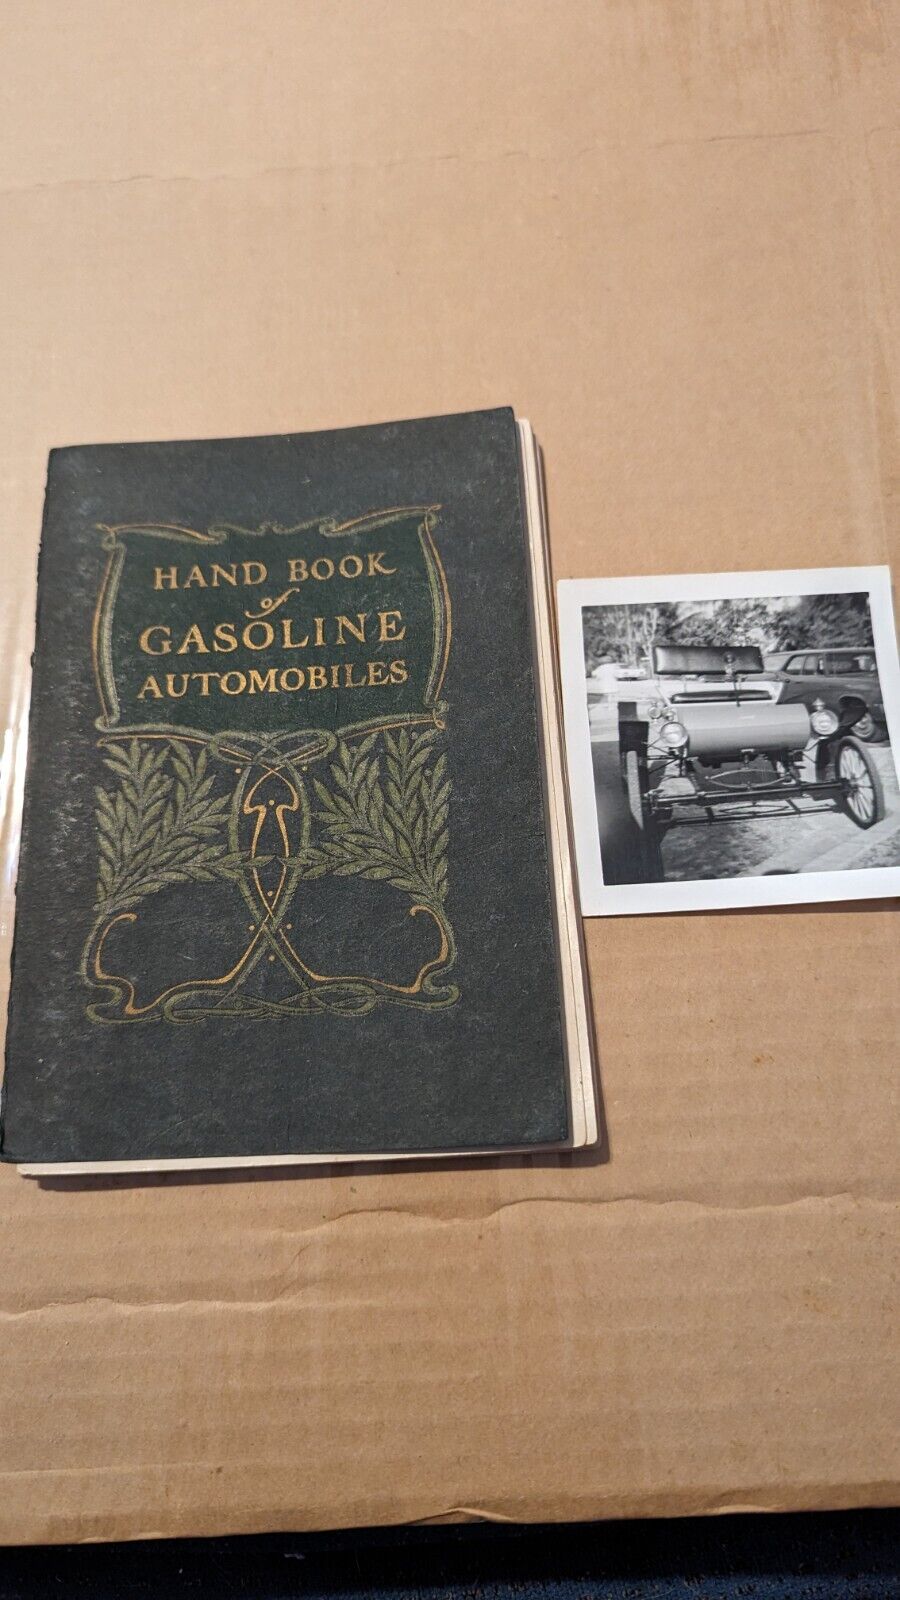 1904 Handbook of Gasoline Automobiles Hand Book Oldsmobile Packard Cadillac Etc.